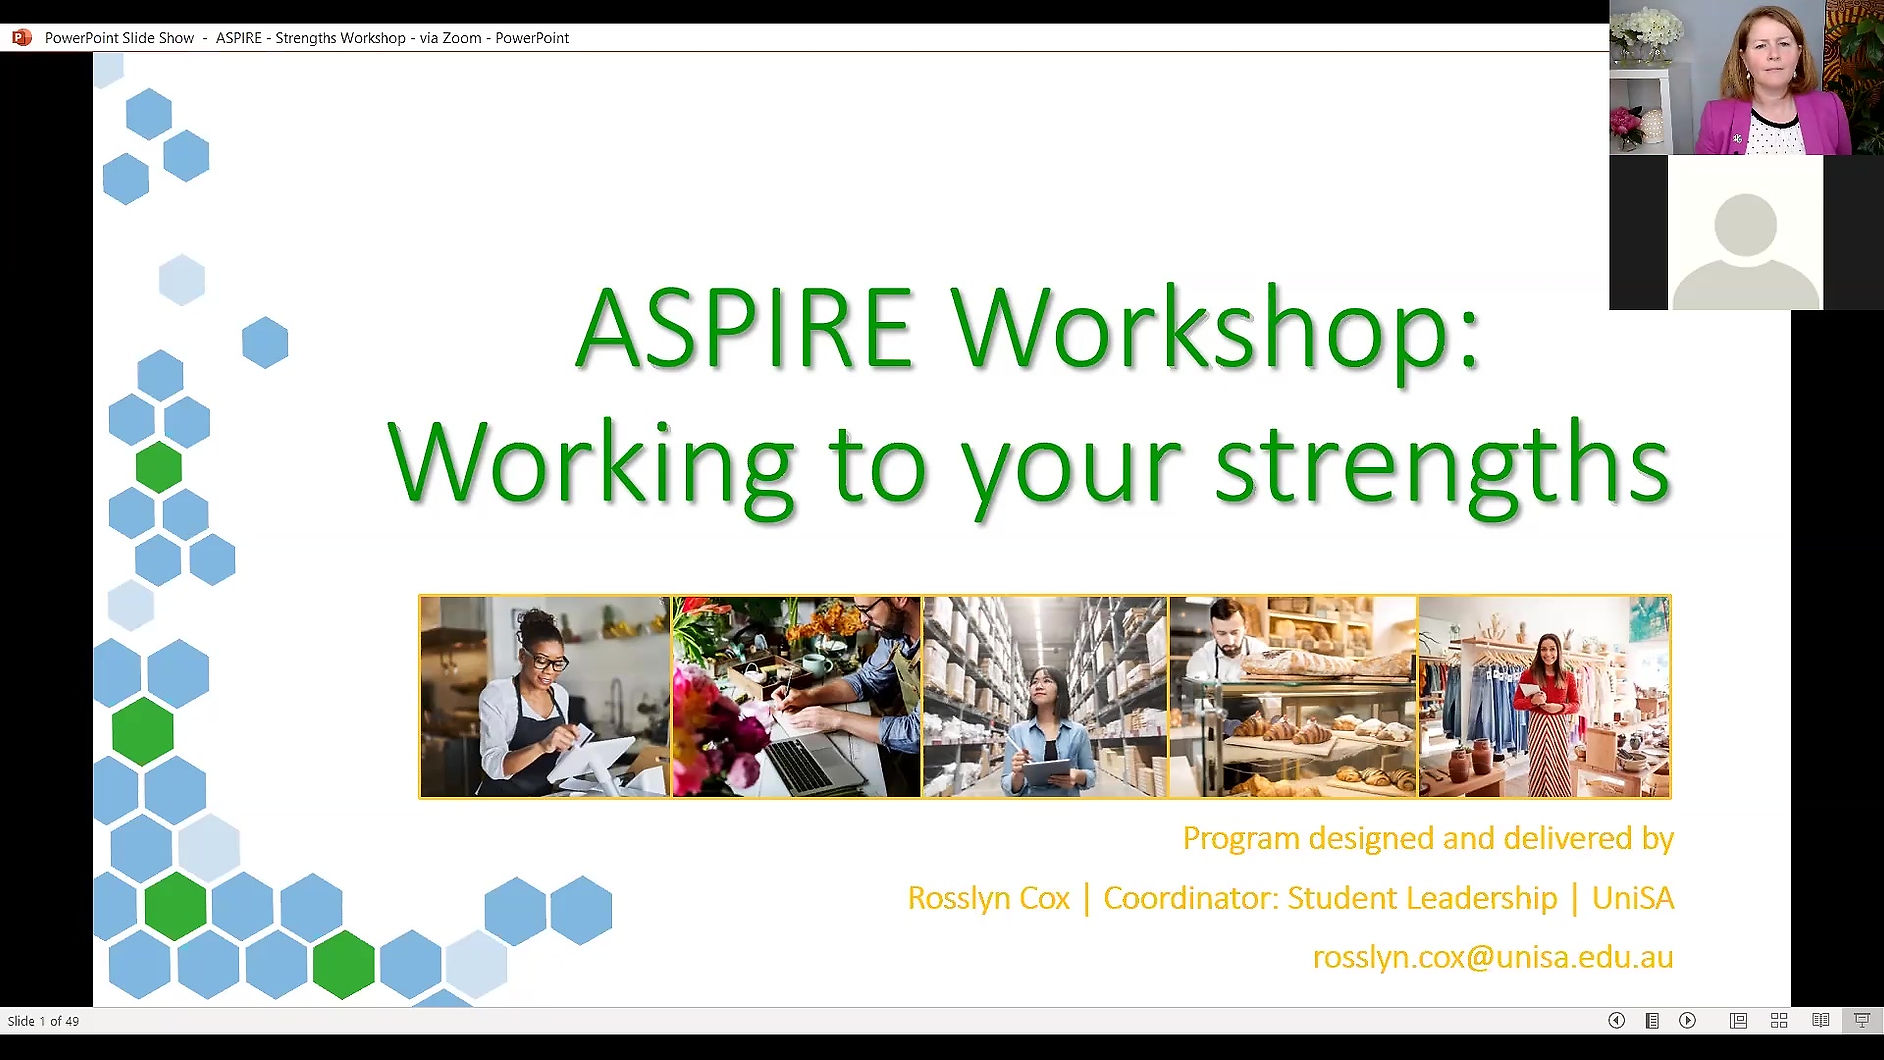 ASPIRE - Strengths Workshop Video